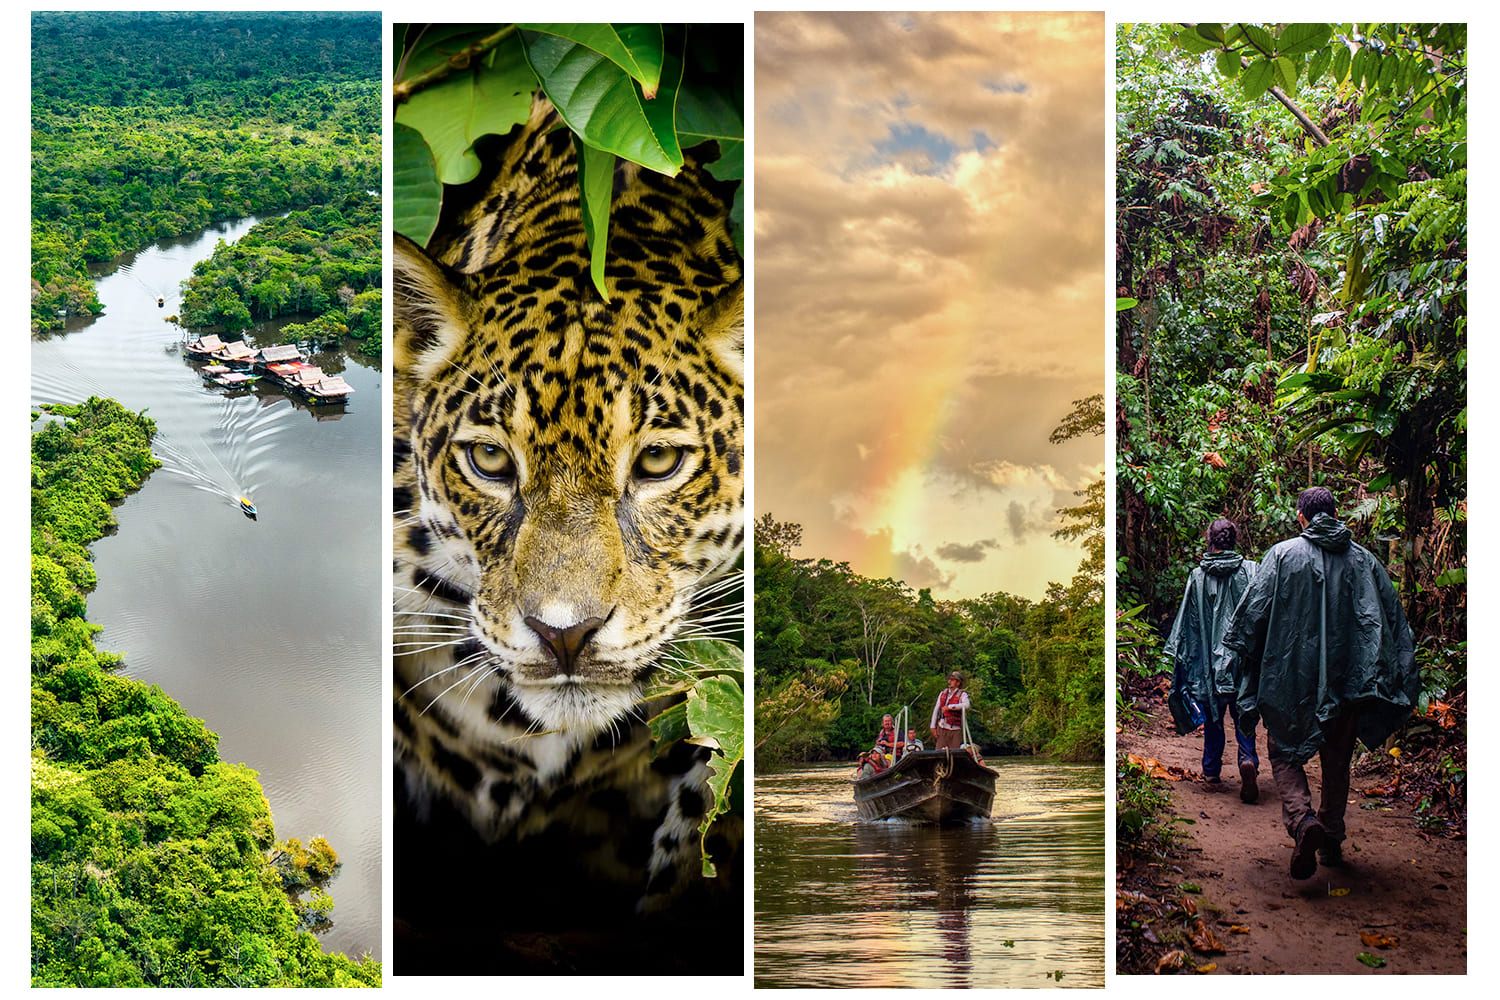 The Peruvian Amazon rainforest